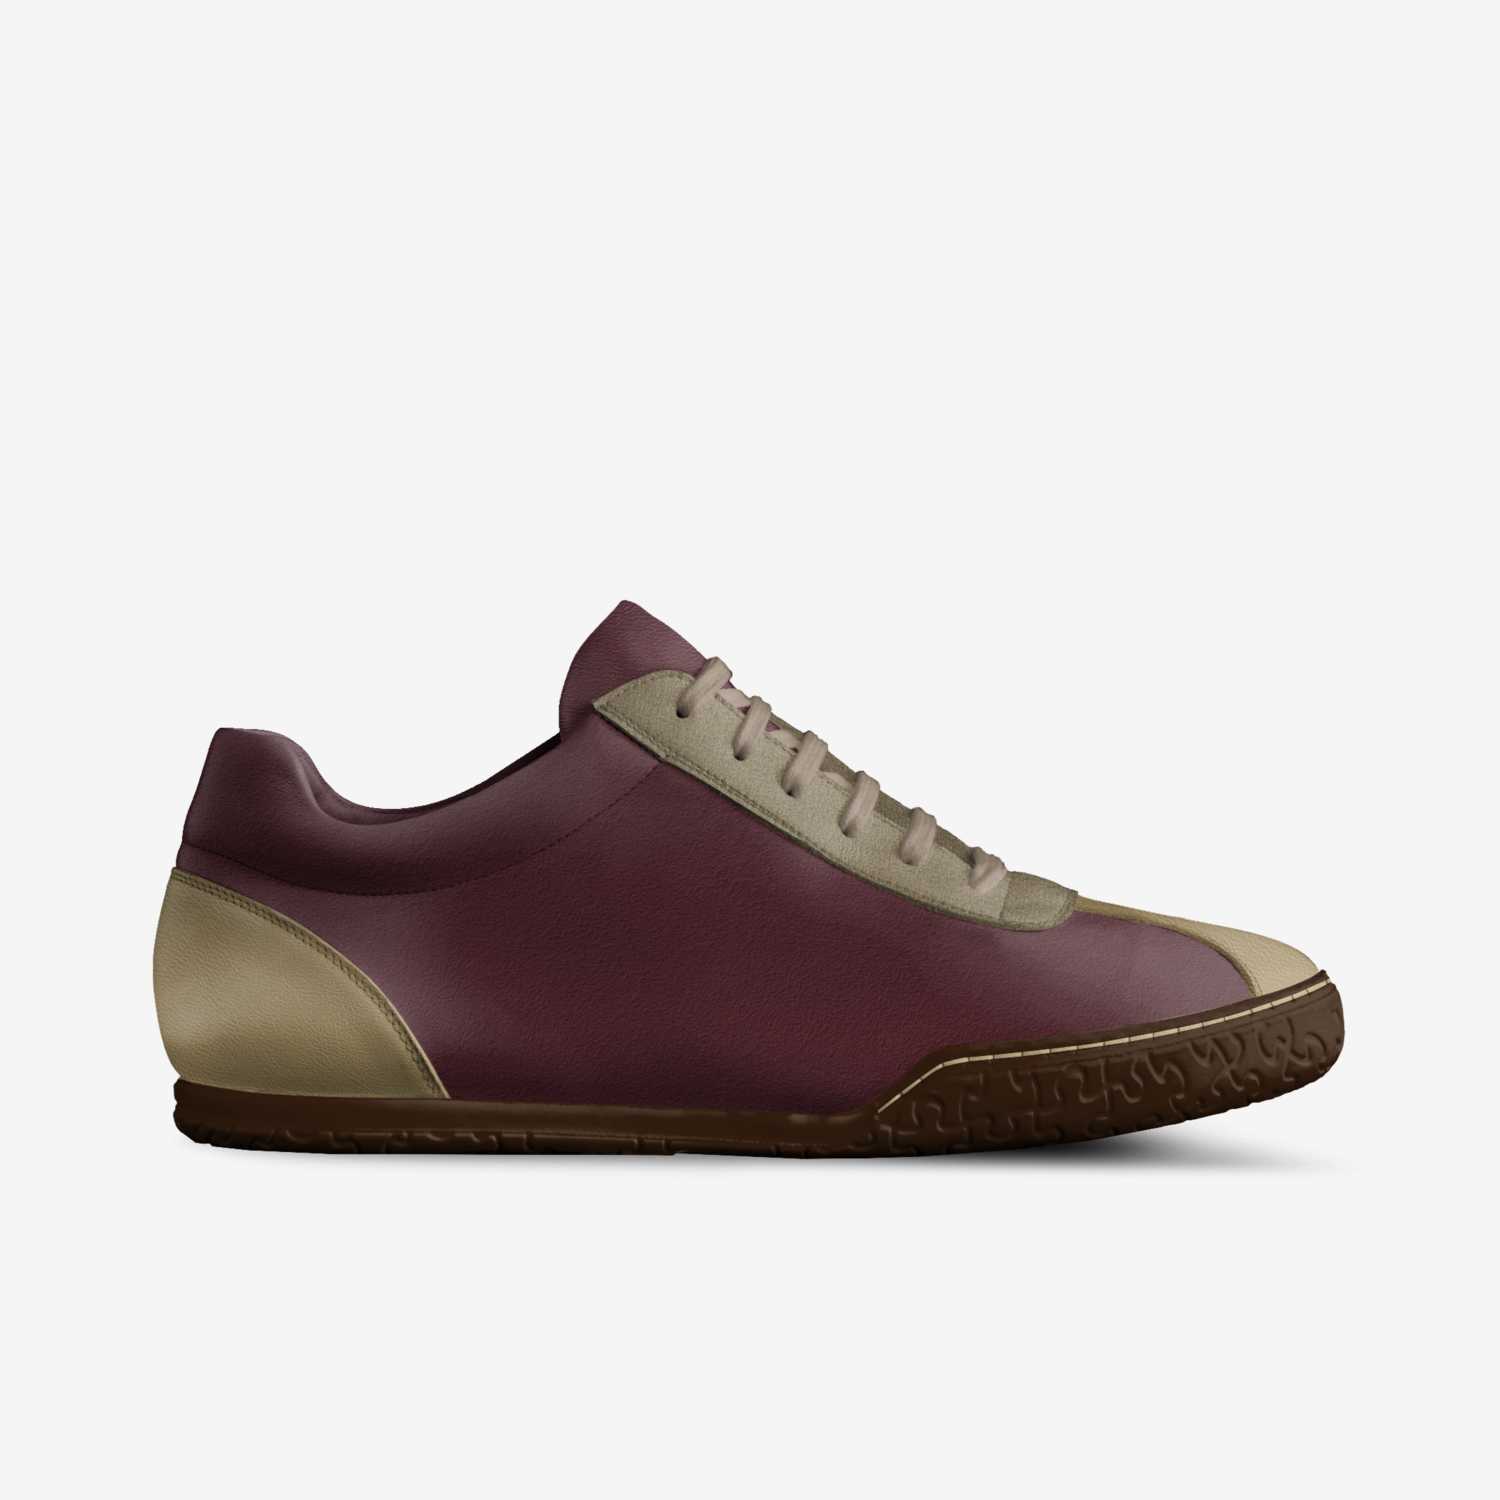 Profiteers custom made in Italy shoes by Aaron Gardner | Side view